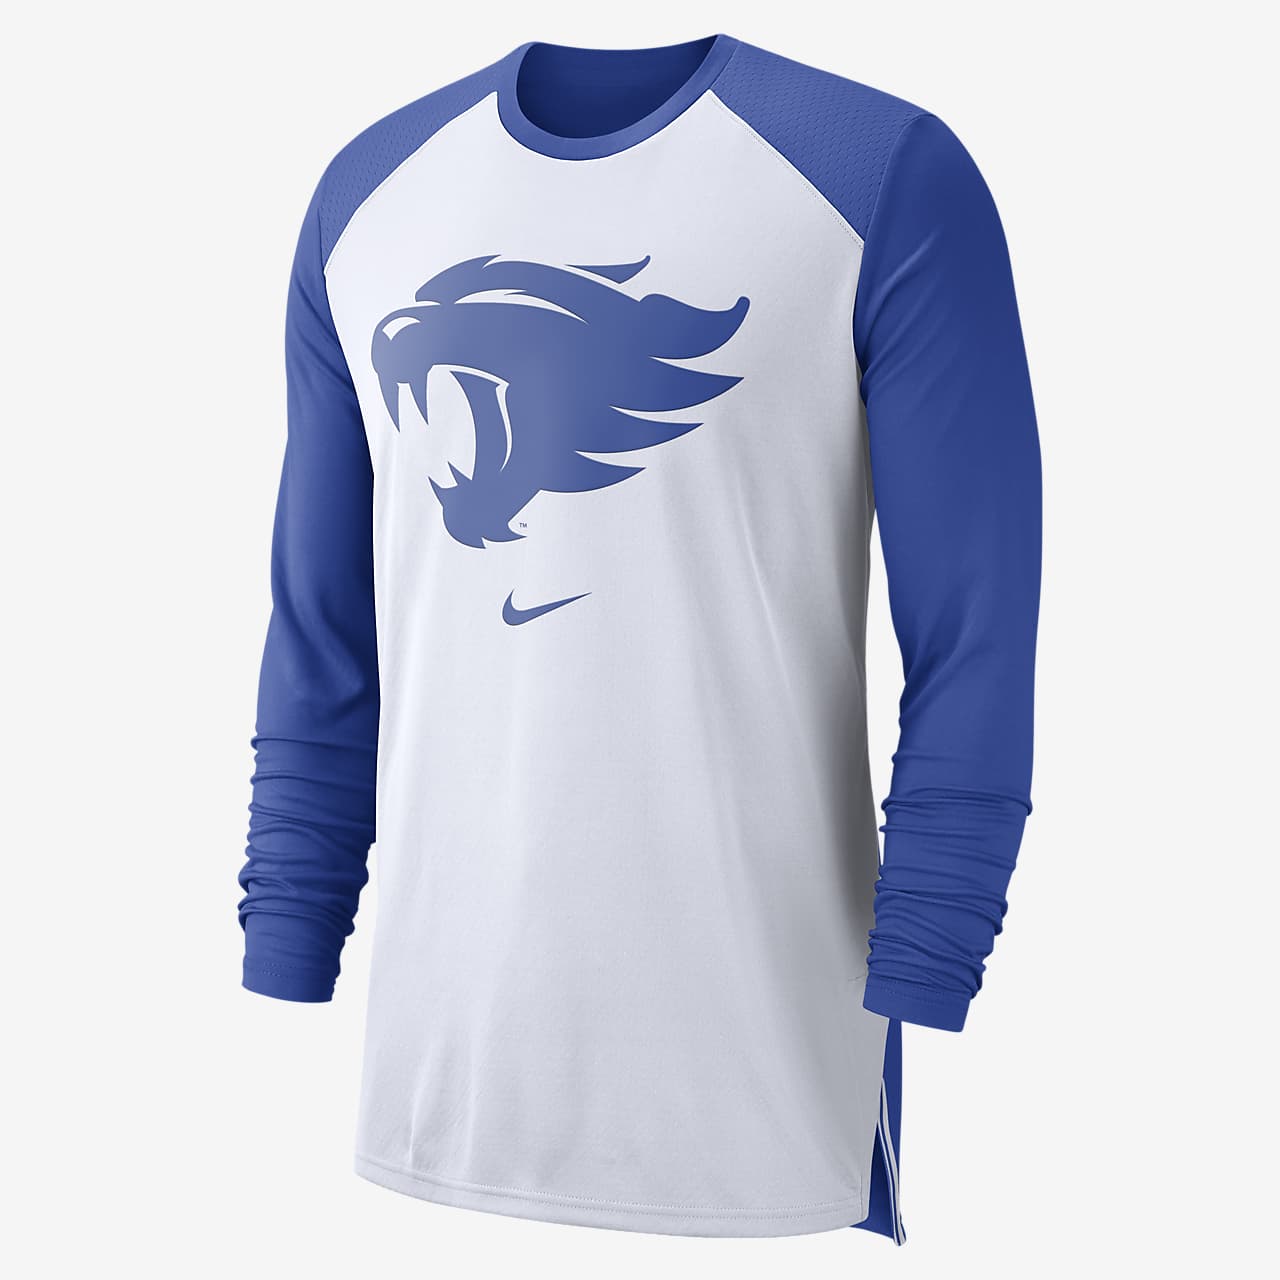 Nike College Breathe (Kentucky) Men's Long-Sleeve Top